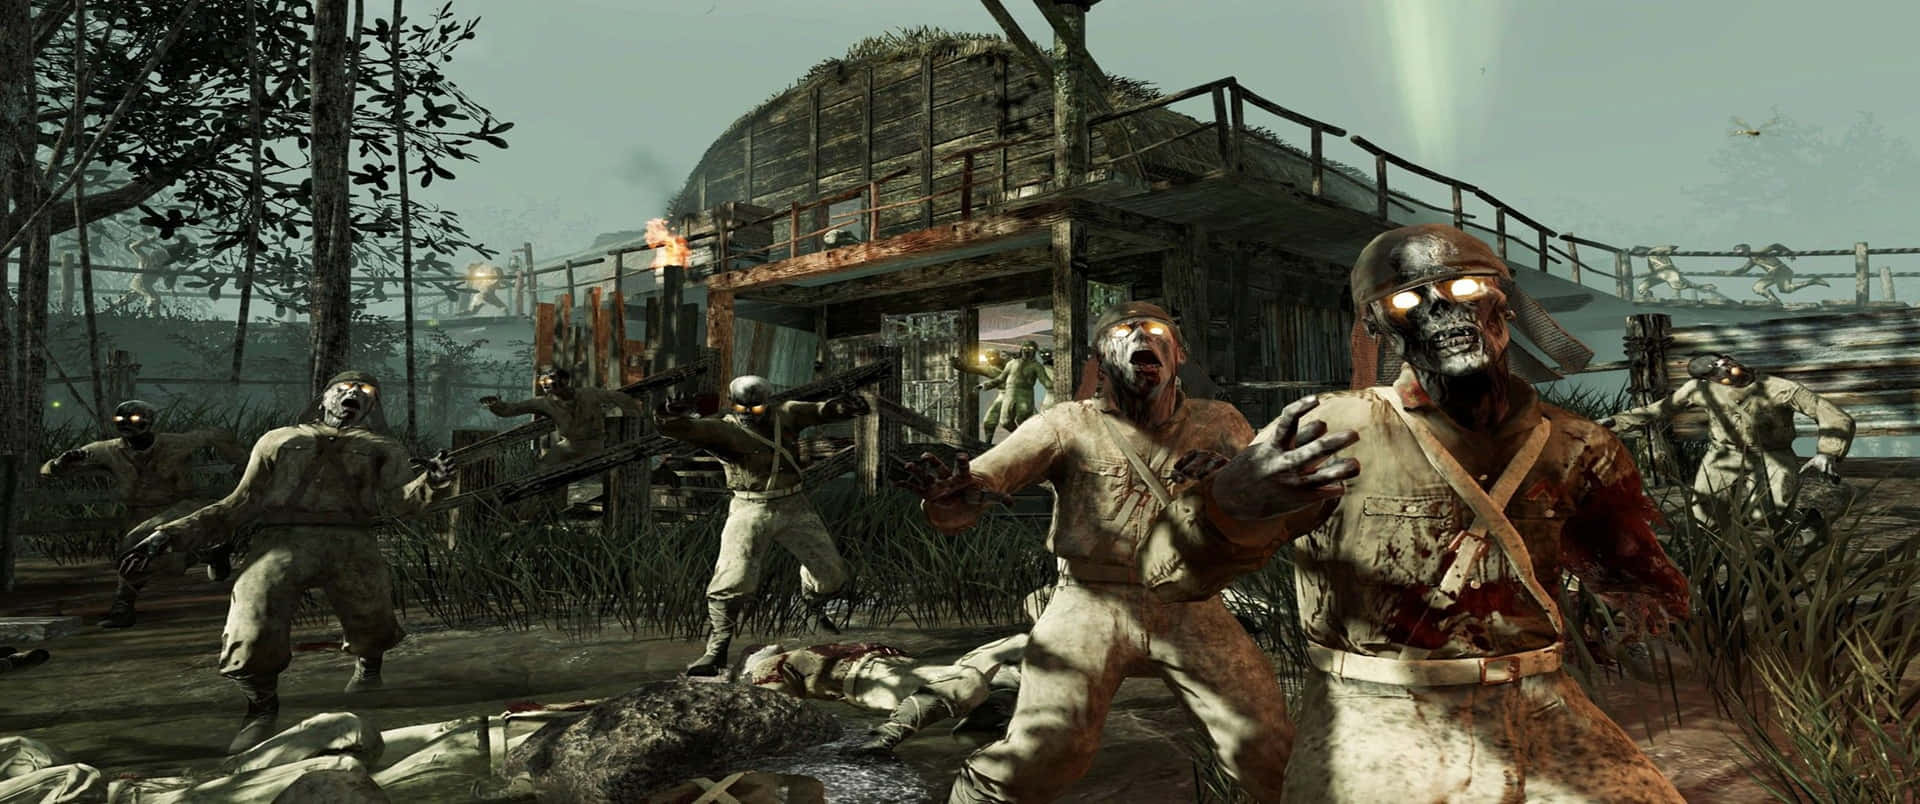 Gruseliges3440x1440p Hintergrundbild Zu Call Of Duty Black Ops Cold War